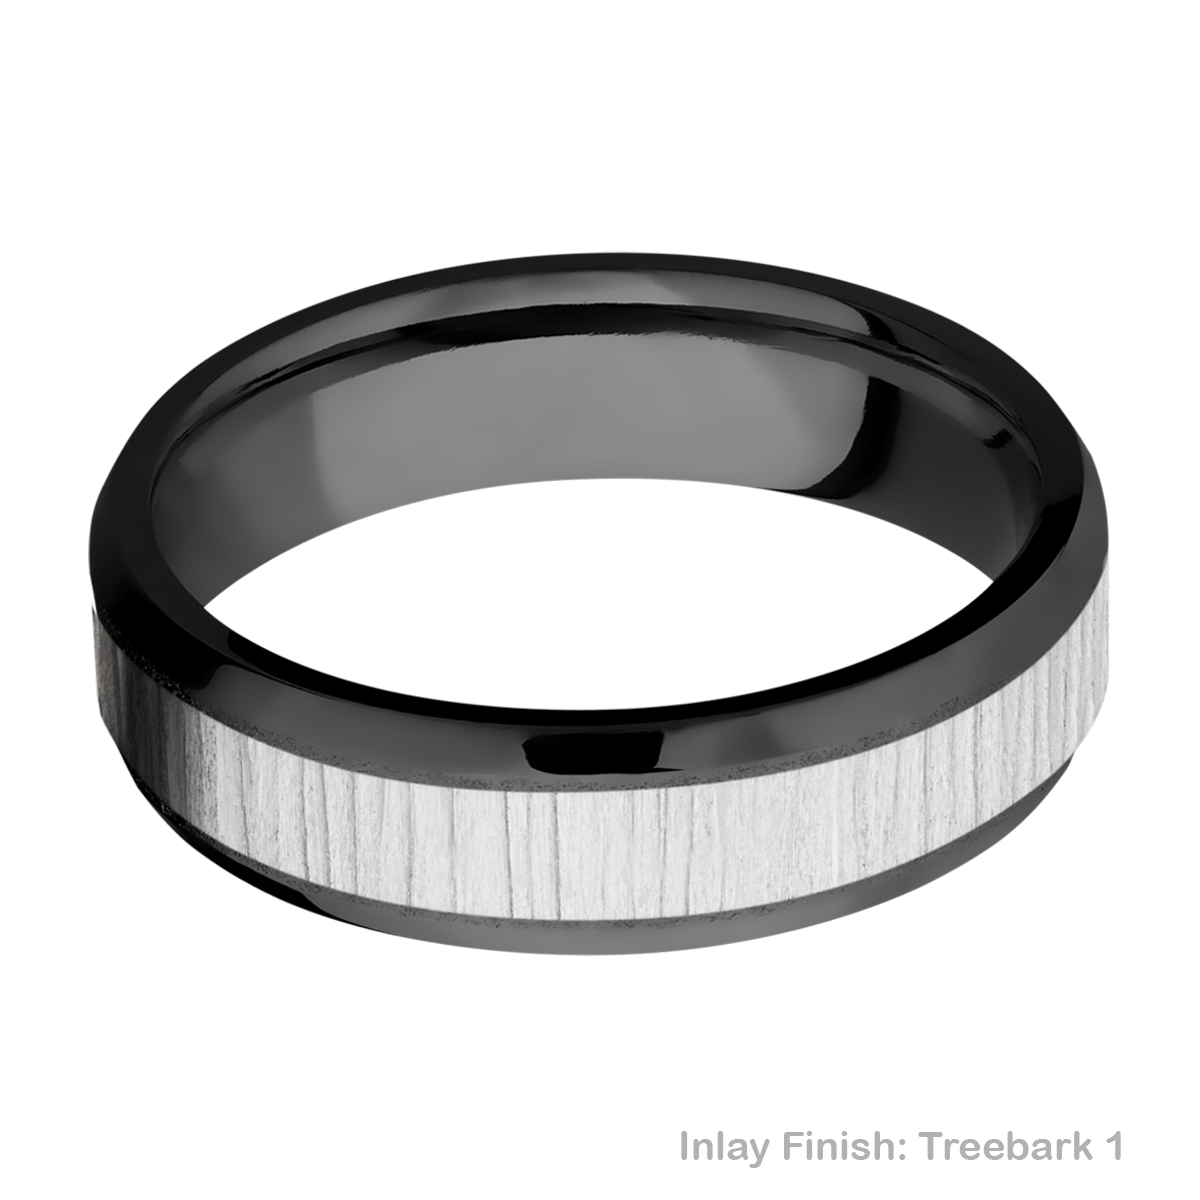 Lashbrook ZPF6B14(NS)/COBALT Zirconium Wedding Ring or Band